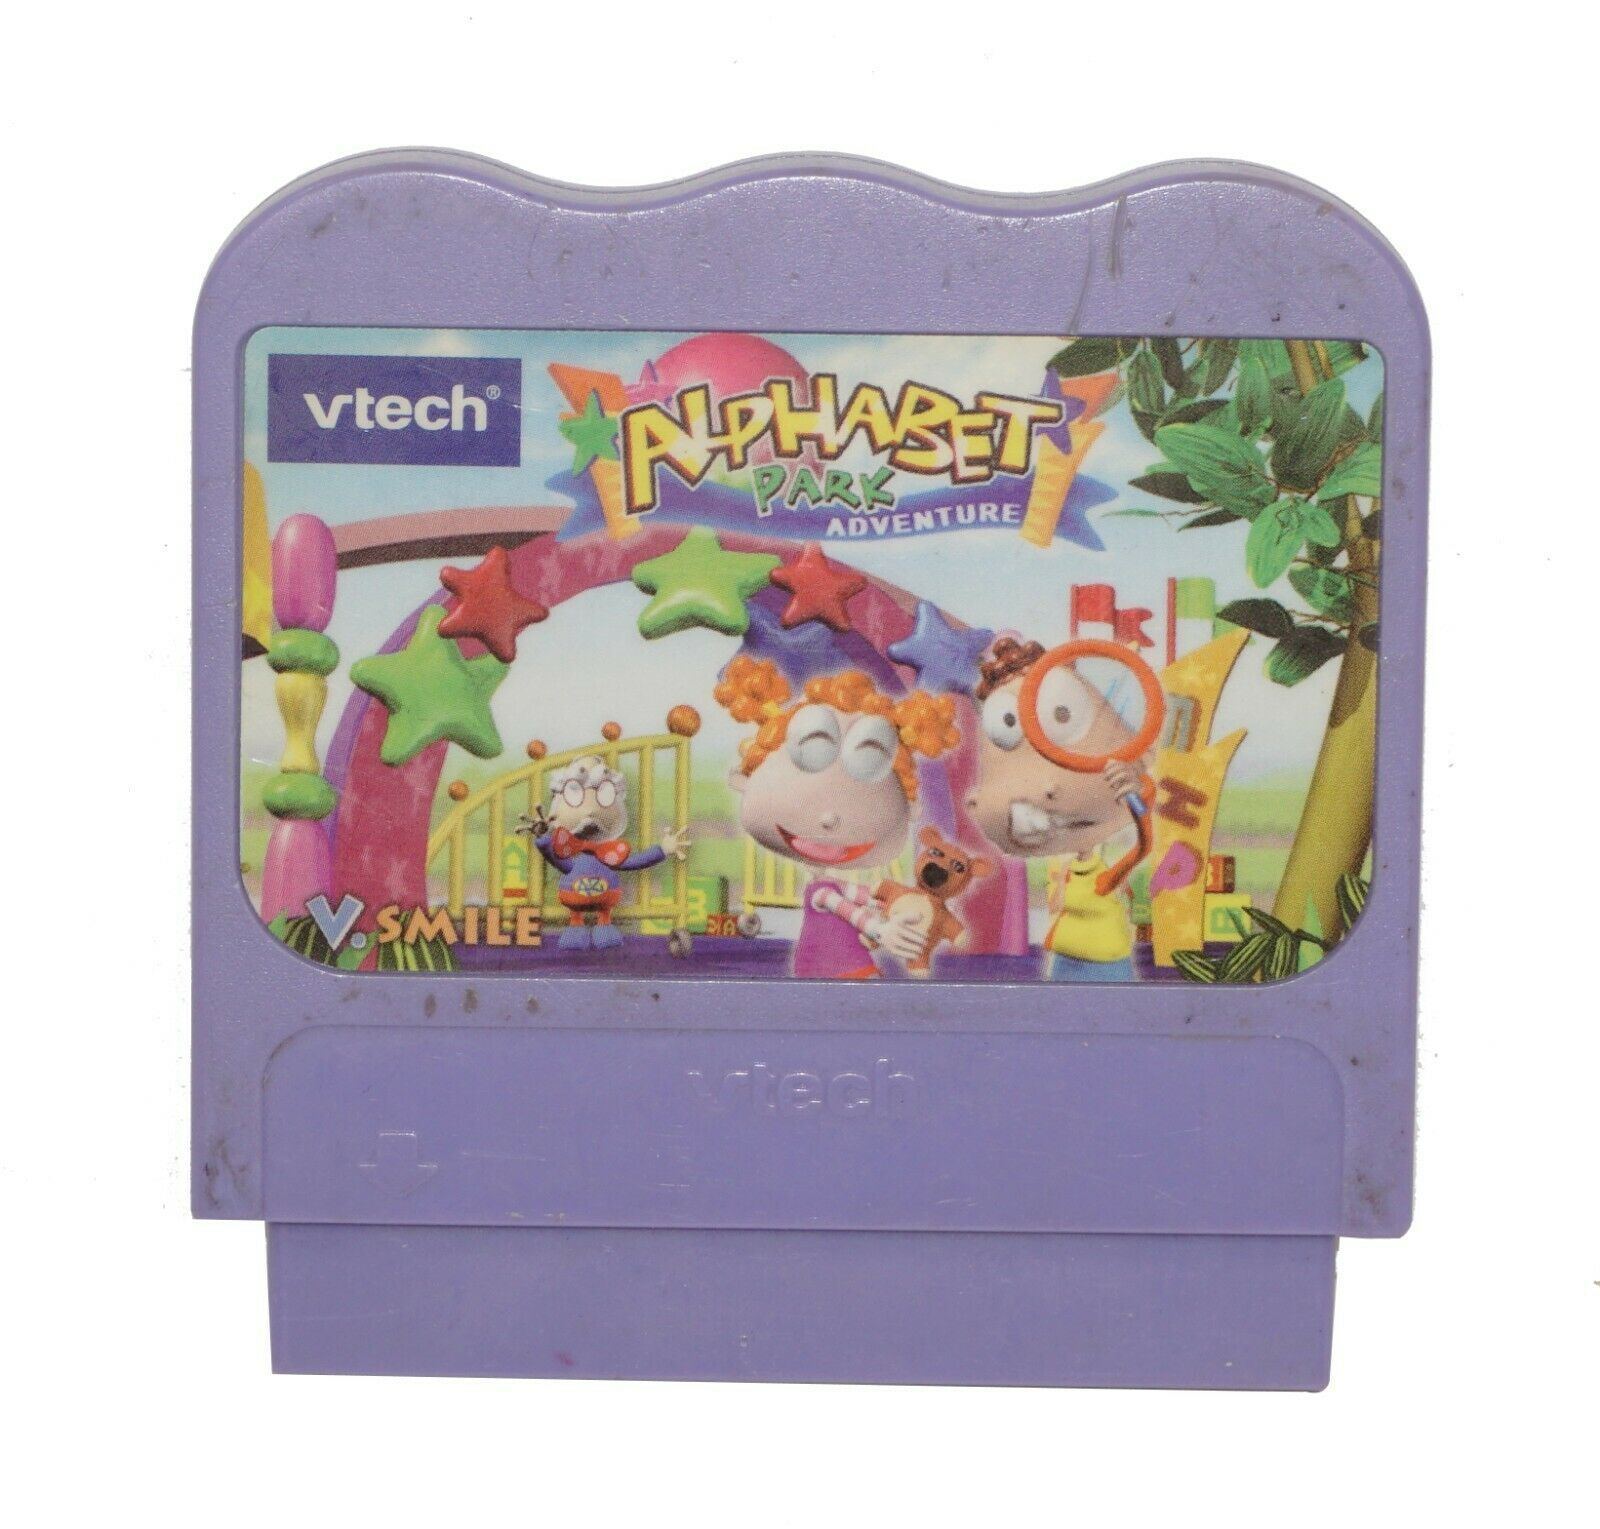 Primary image for VTech VSmile Alphabet Park Adventure Learning - Educational Game Game Cartridge